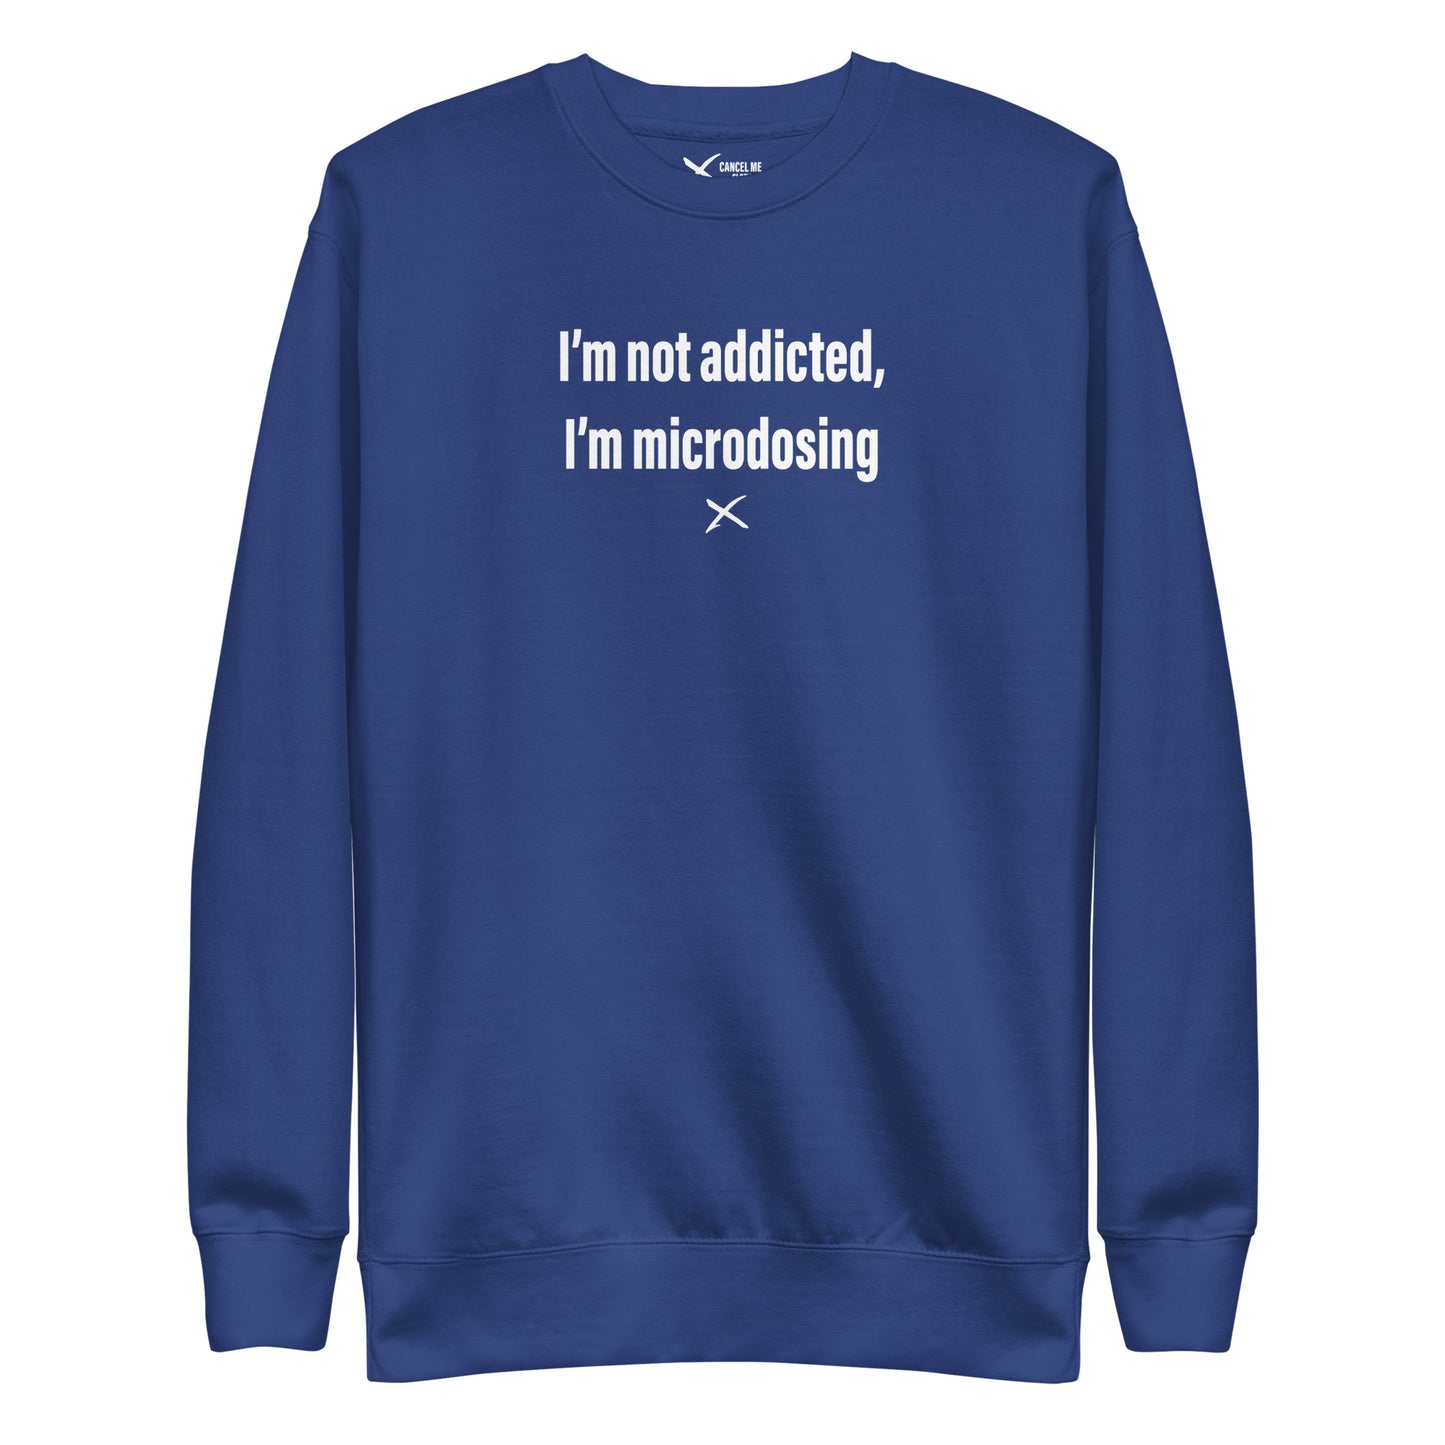 I'm not addicted, I'm microdosing - Sweatshirt